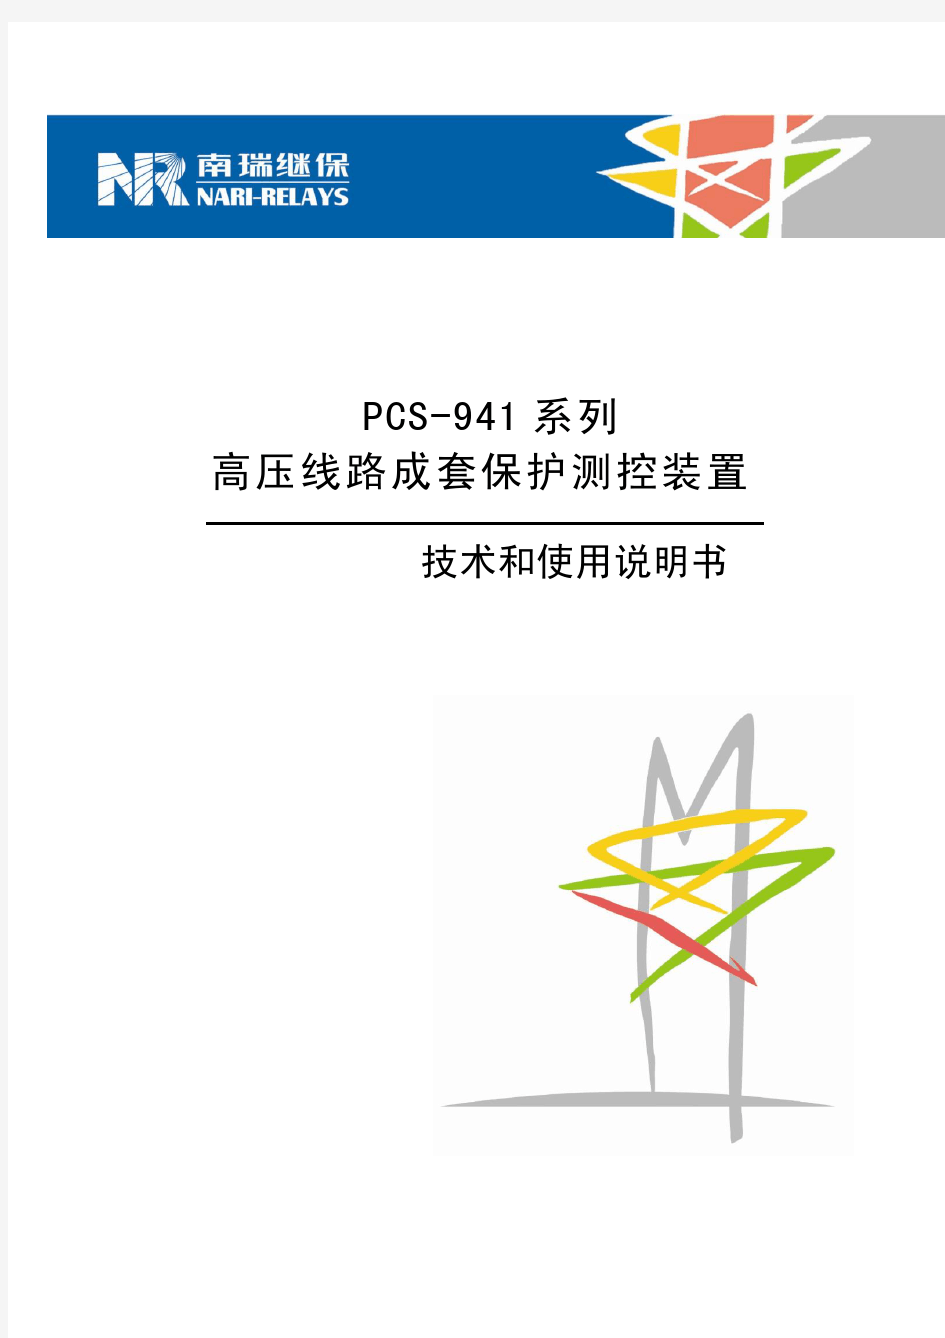 PCS-941保护测控装置技术和使用说明书_标准版110504